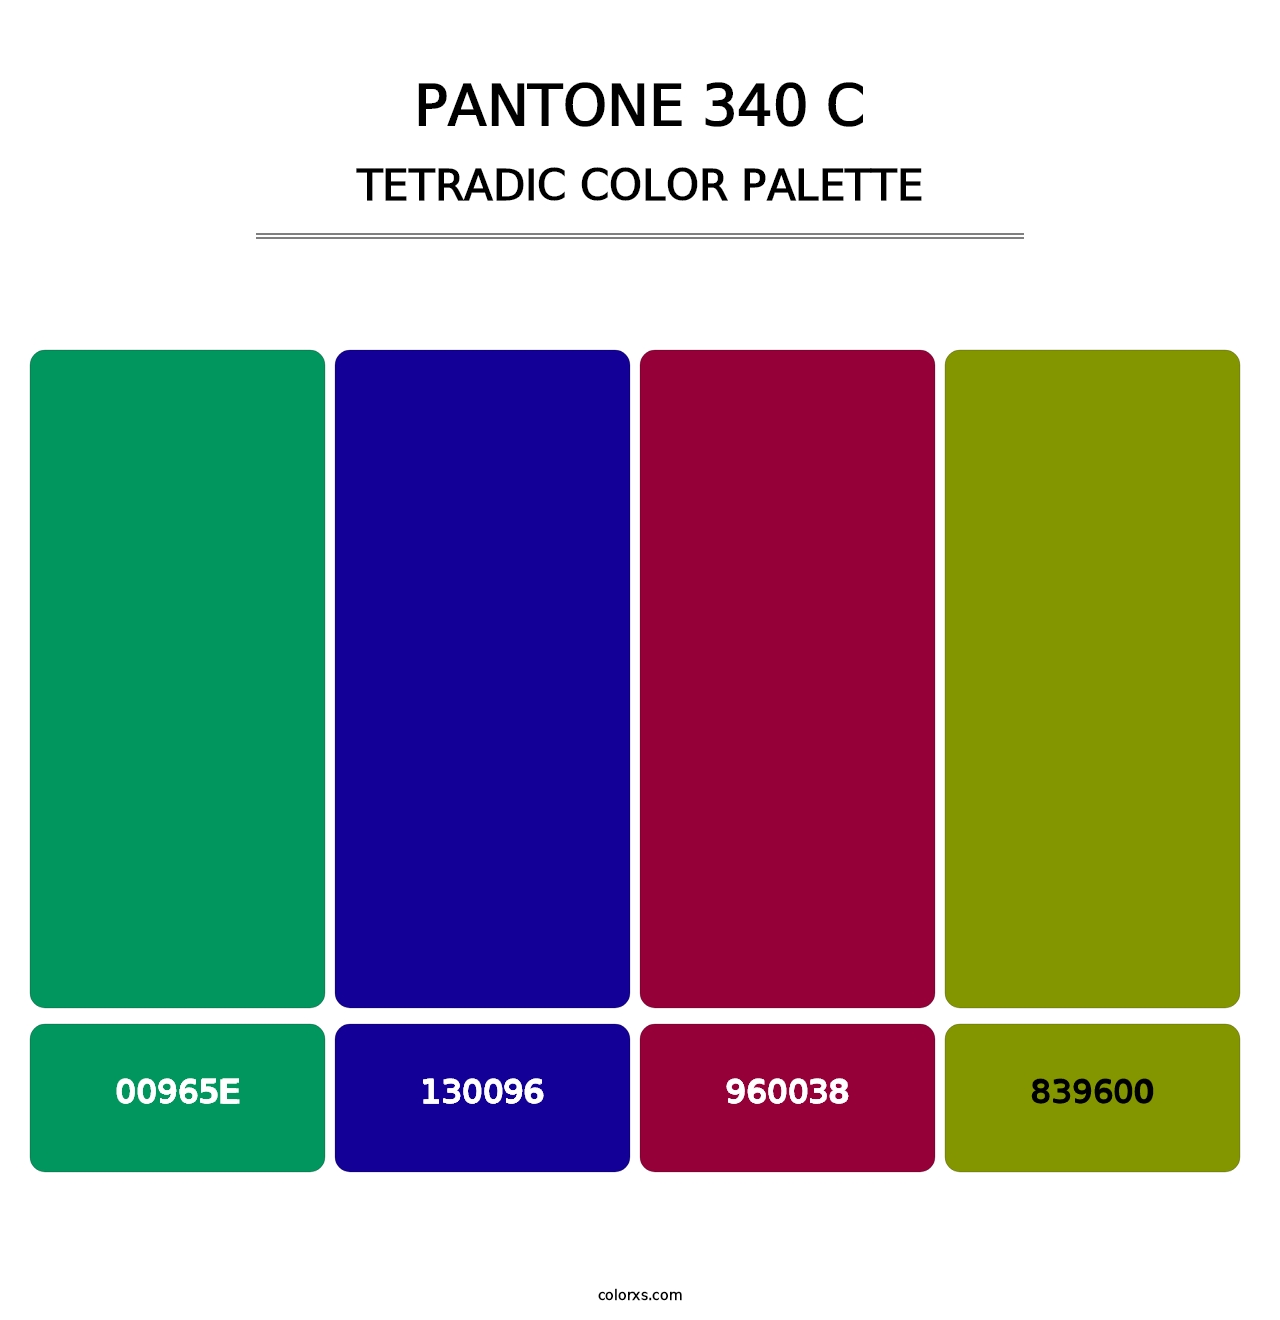 PANTONE 340 C - Tetradic Color Palette